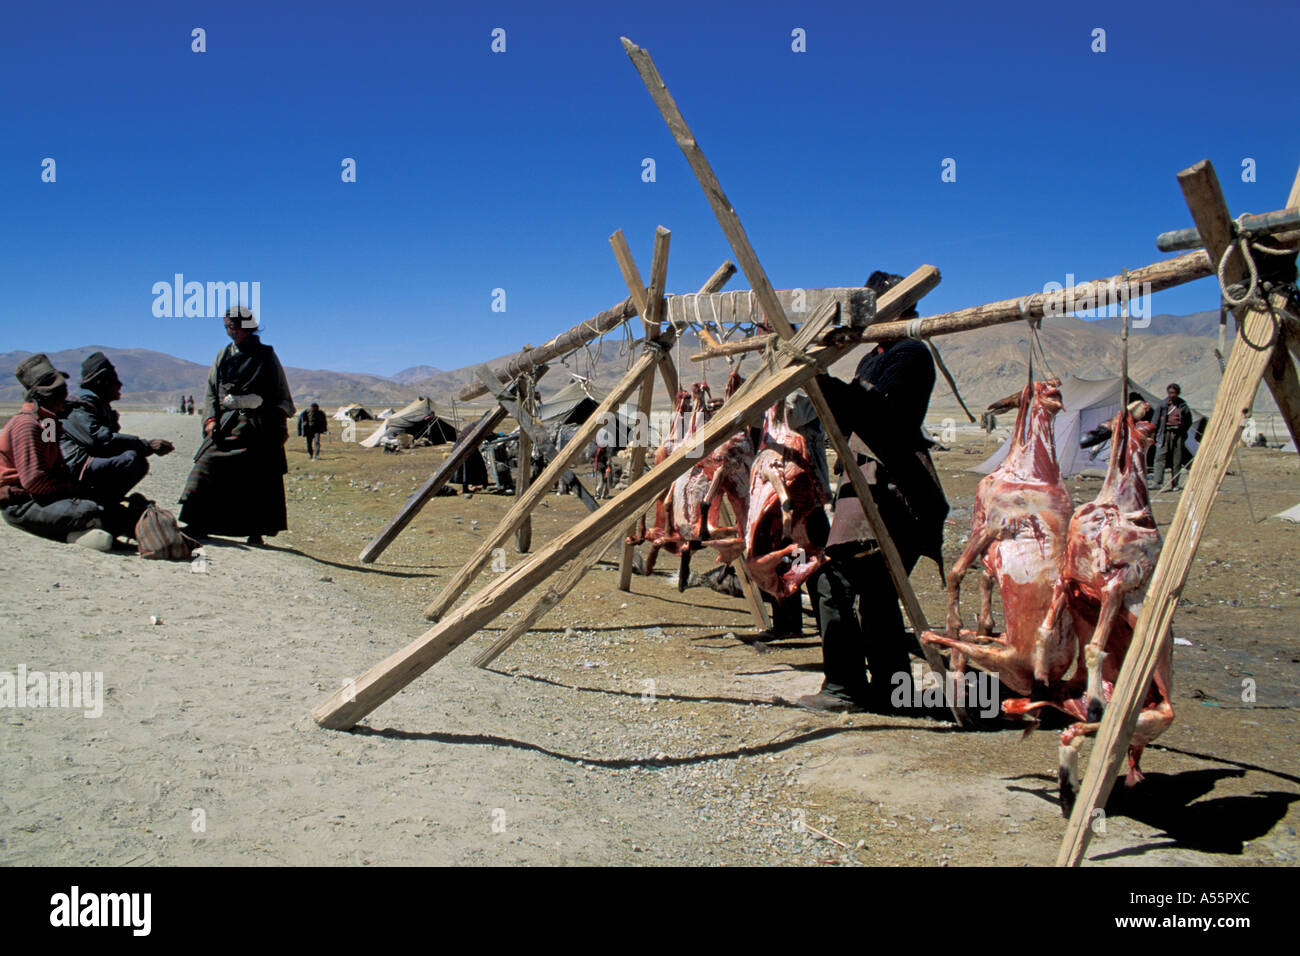 Nomads slaughtering slaughter Tibet Stock Photo